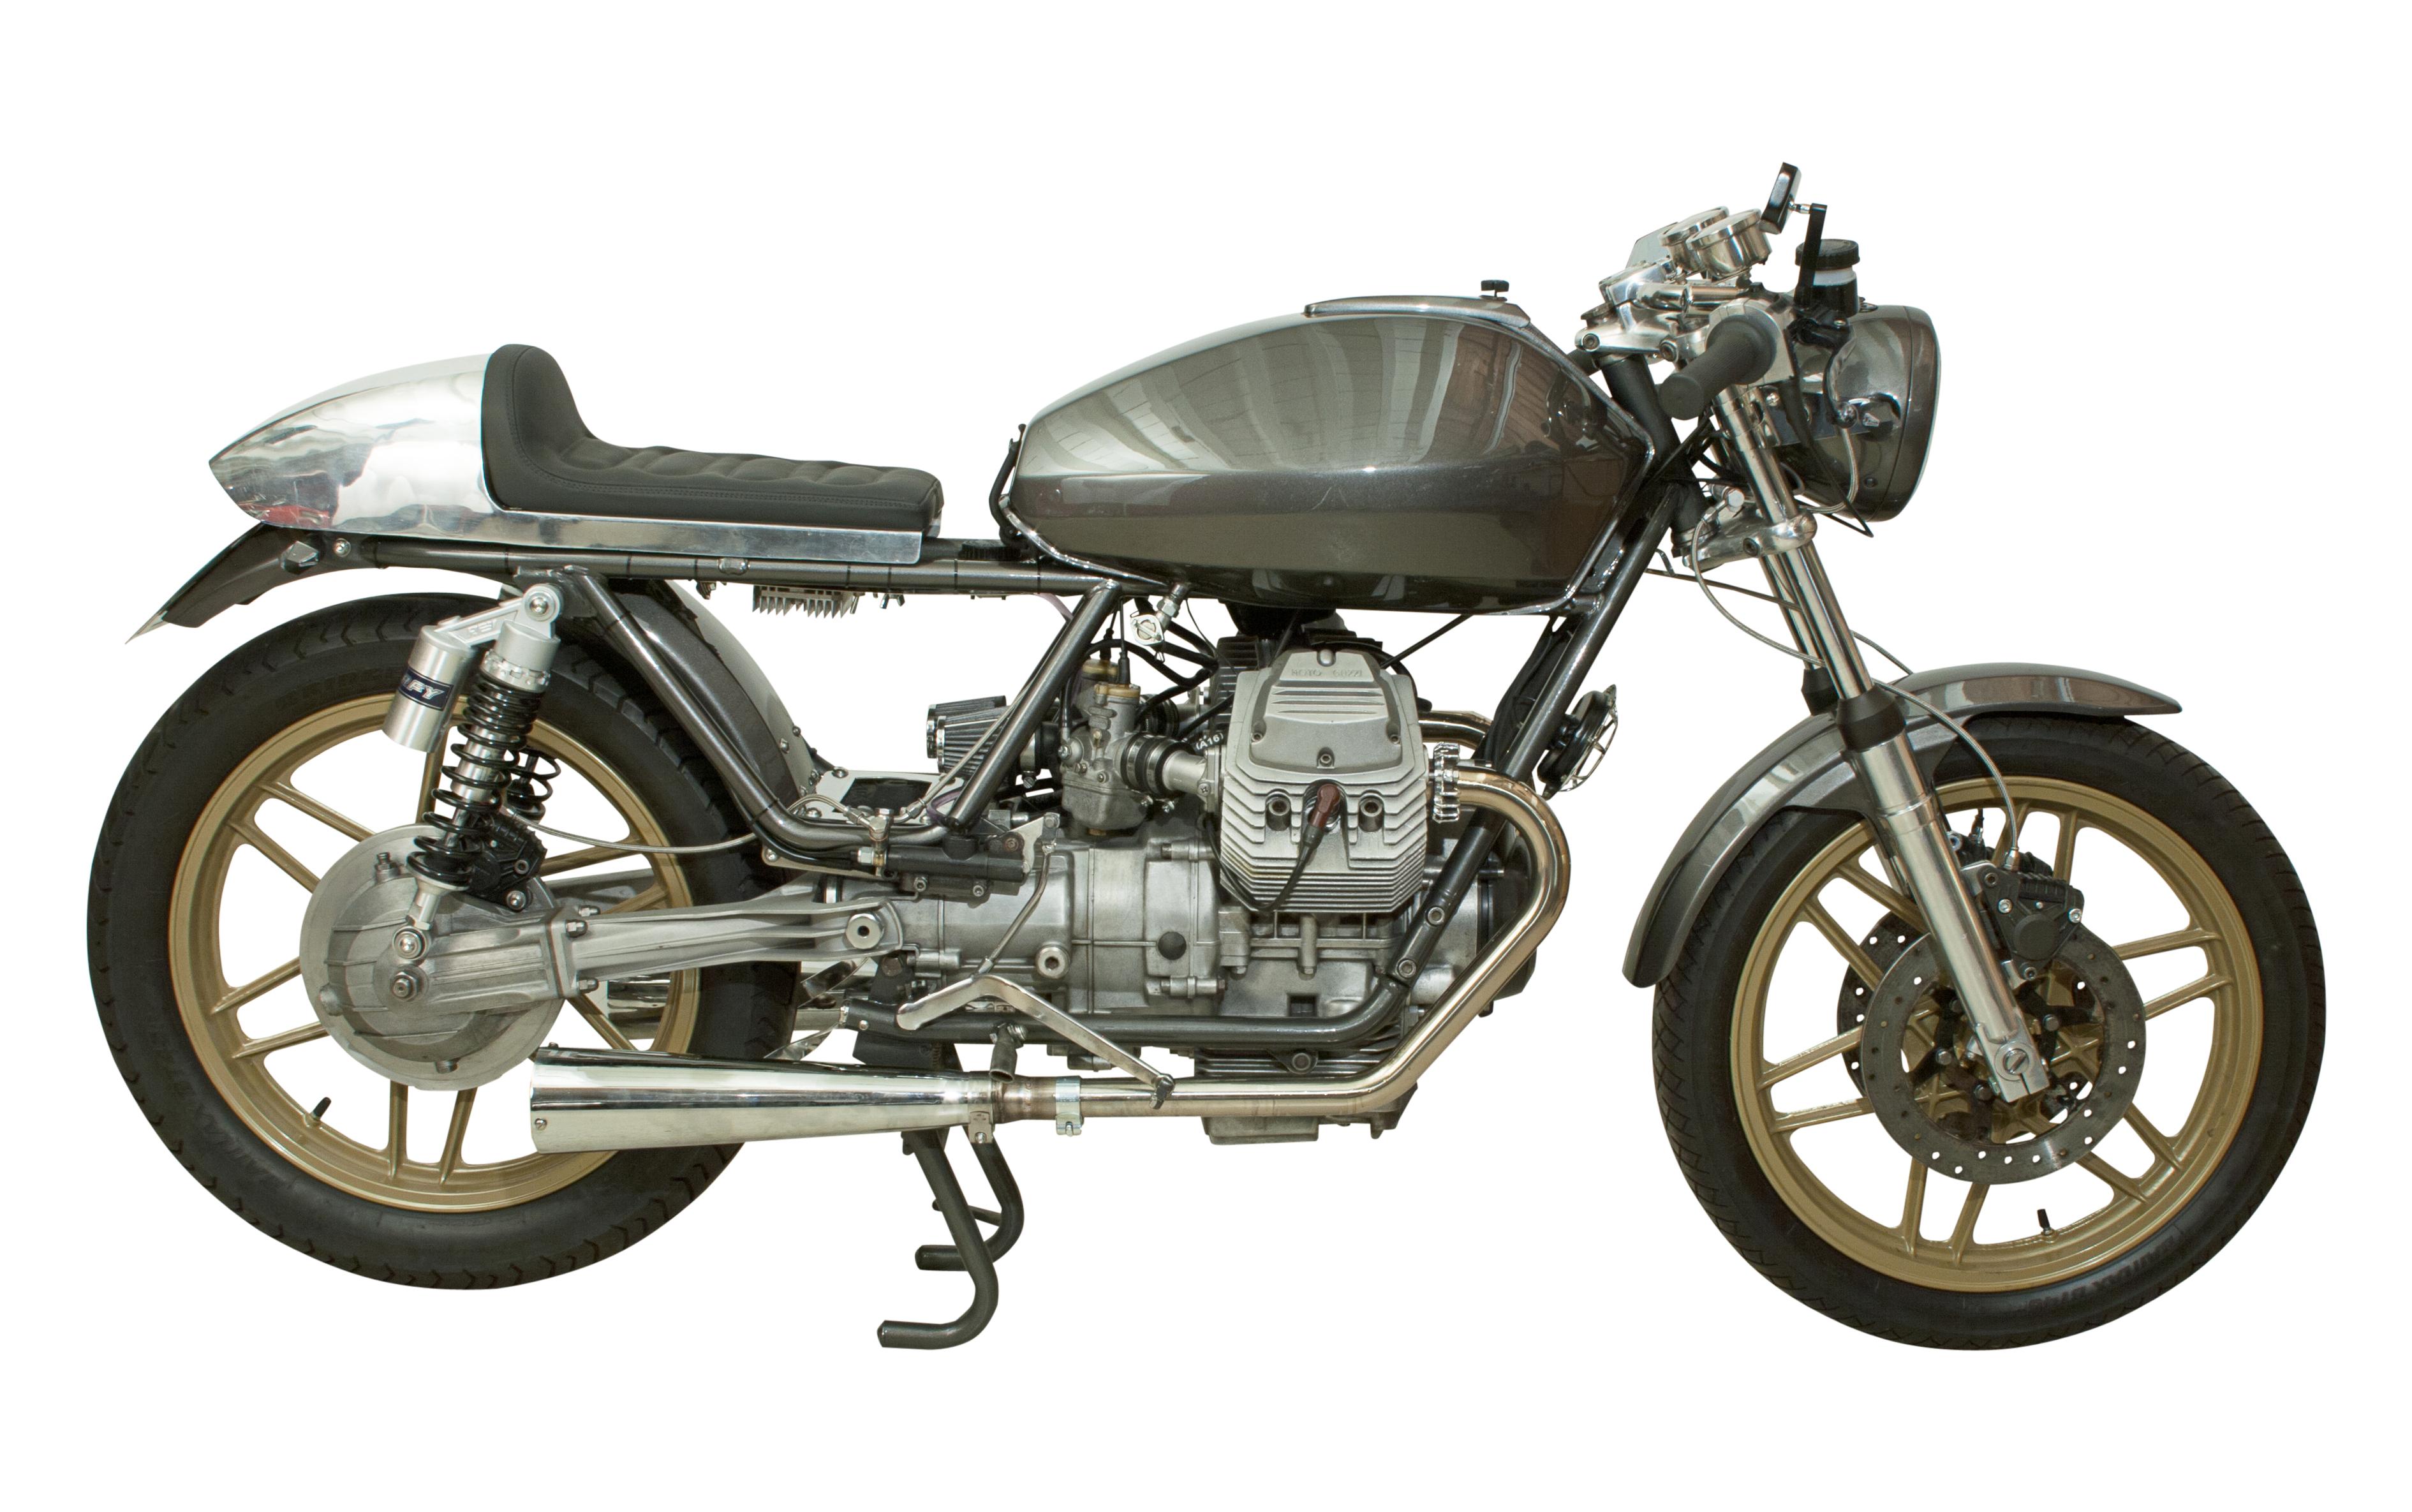 1982 Moto Guzzi Cafe Racer V50 Italian Motorcycle For Sale 6